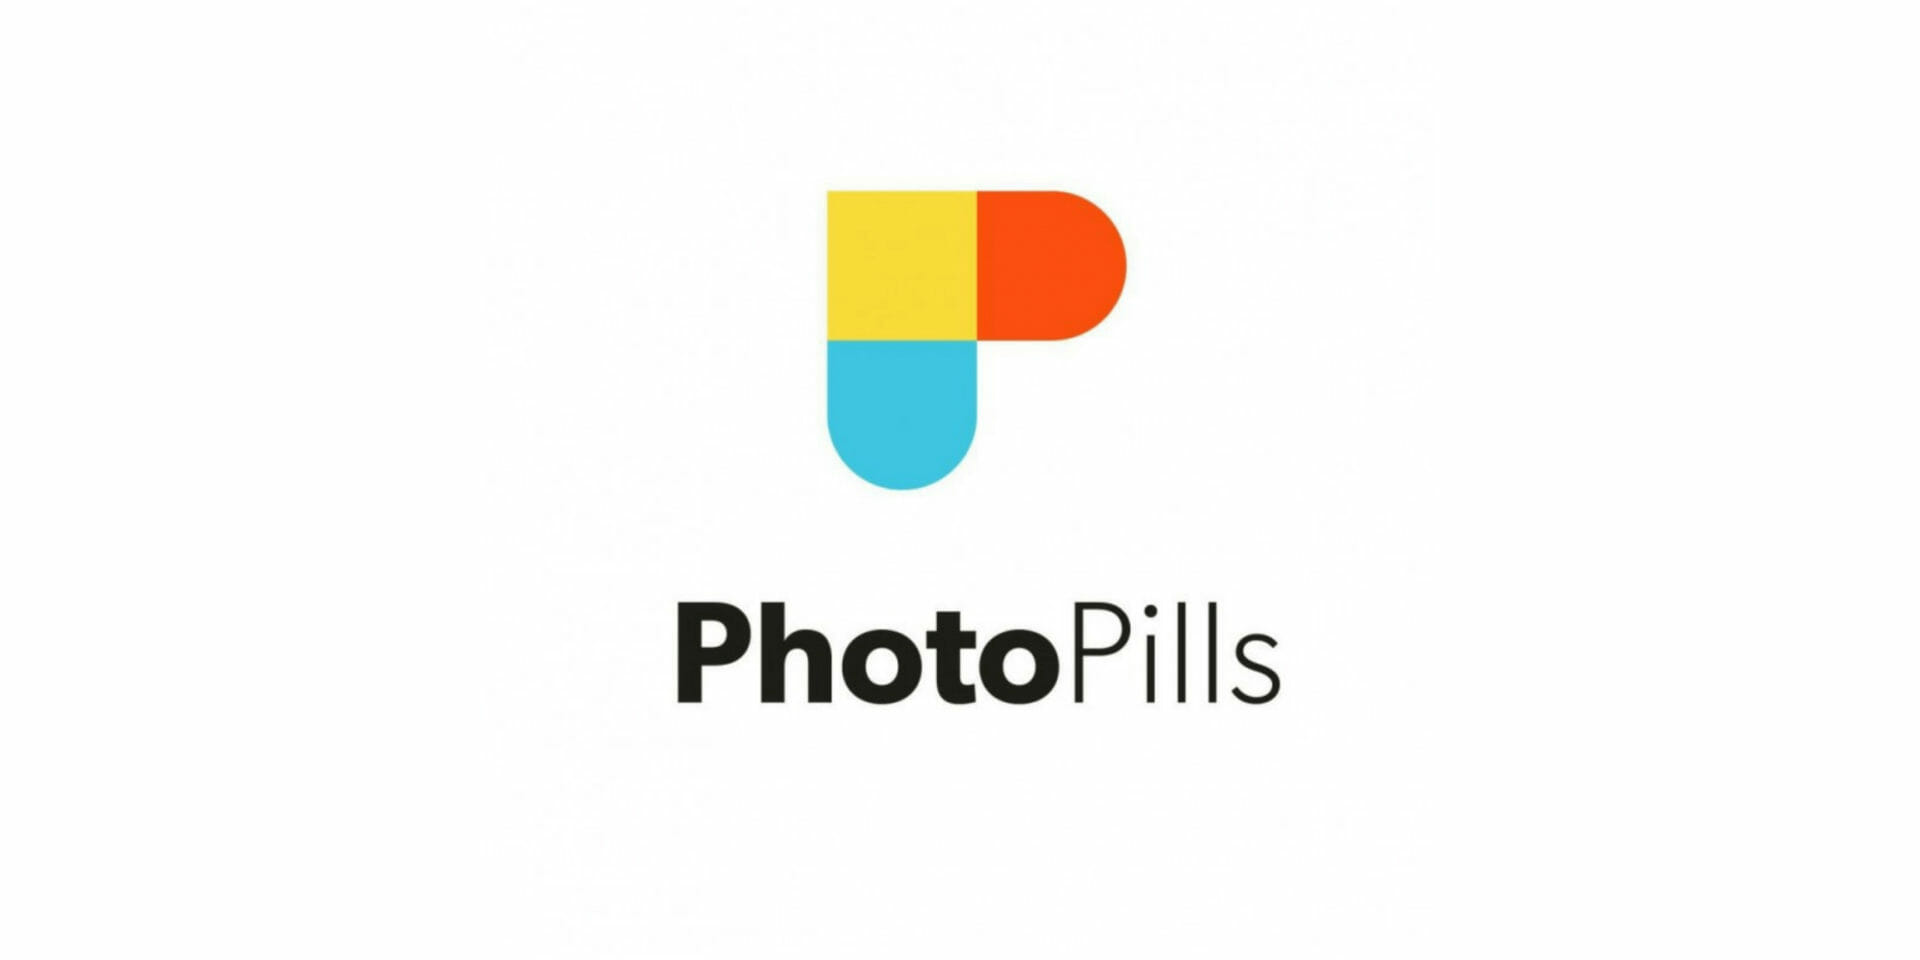 photopills fotoshooting planungstool